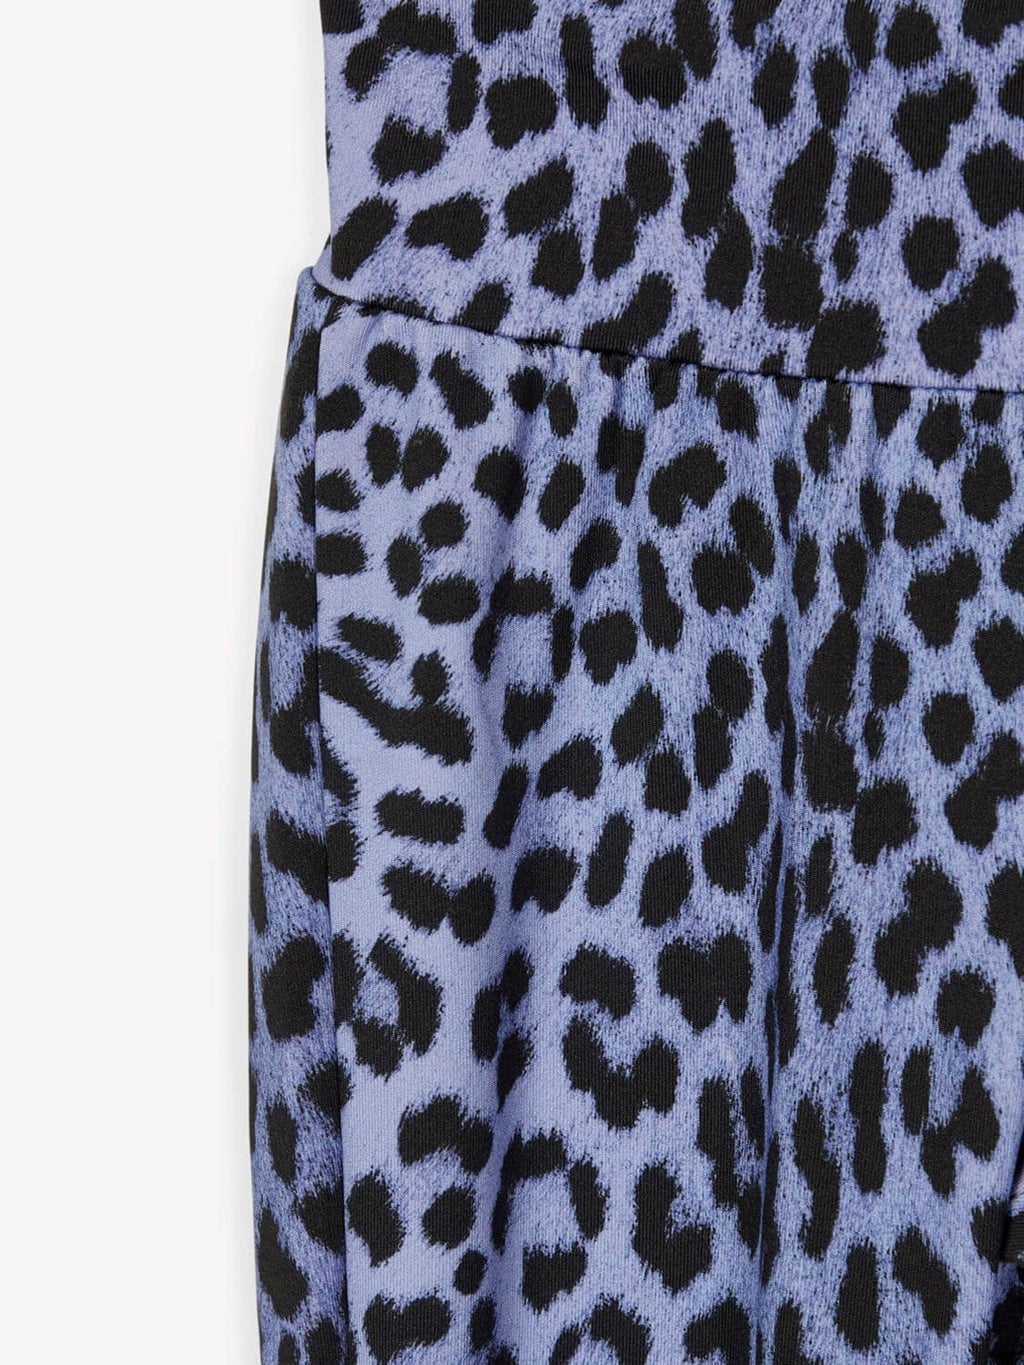 Leggings à motifs - léopard bleu